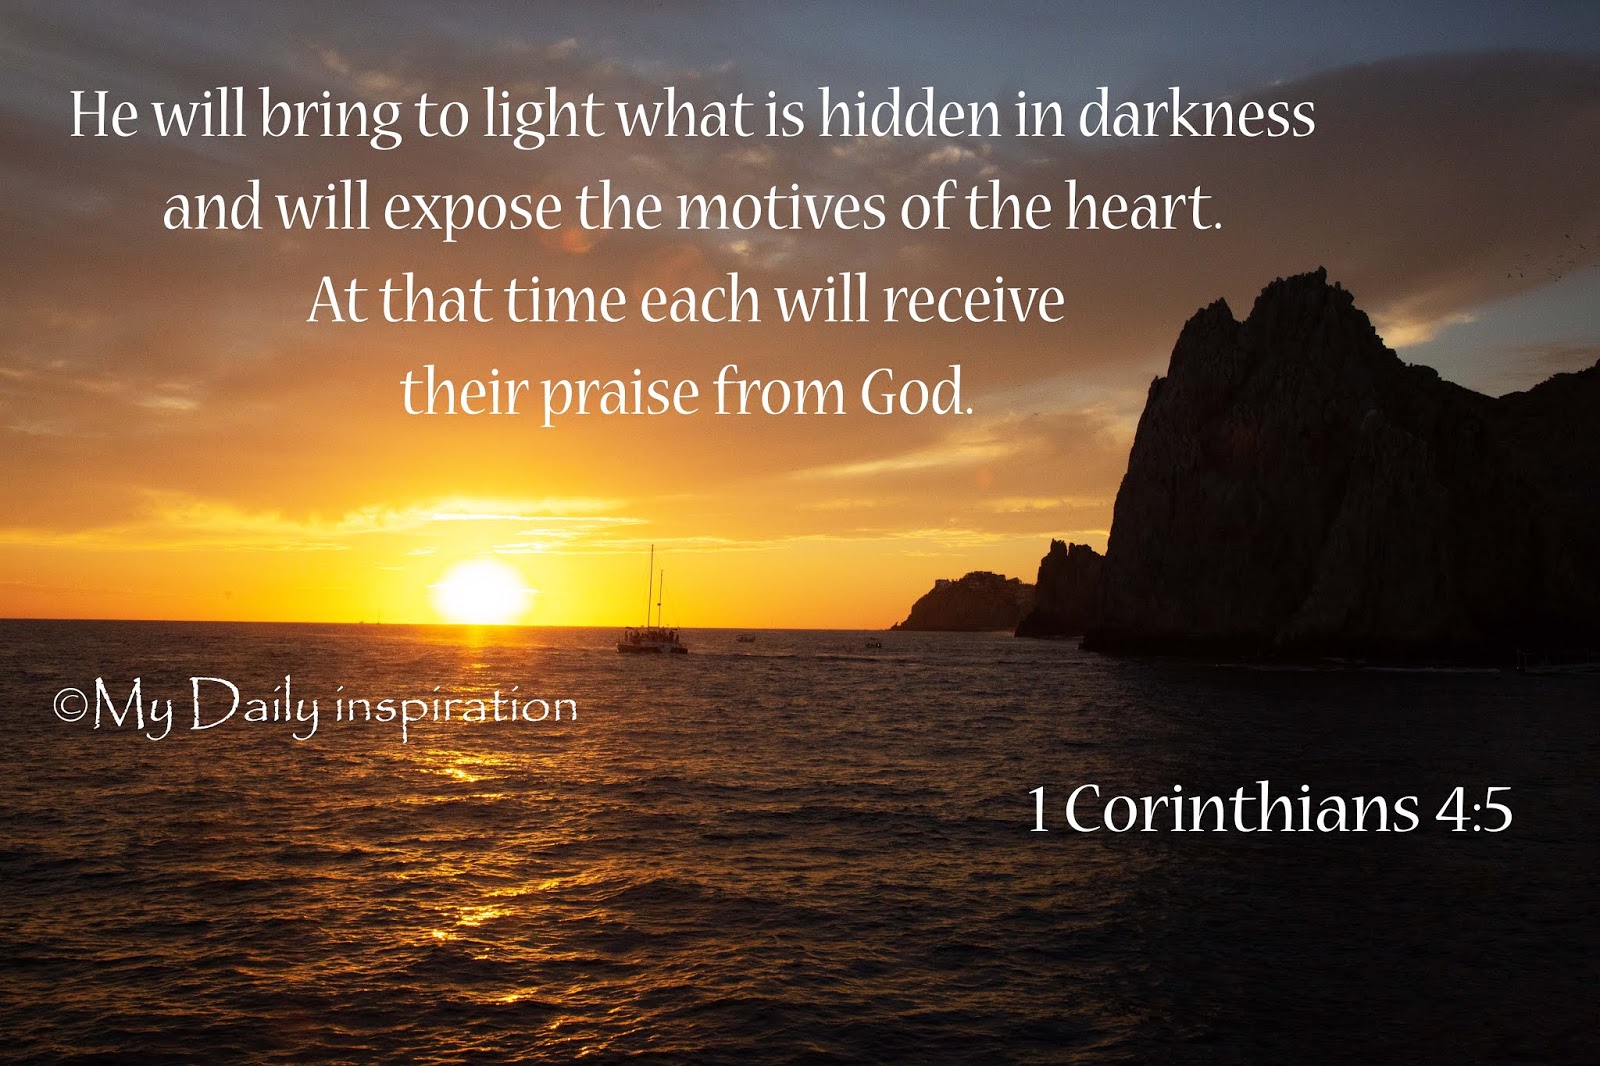 bring light what is hidden darkness